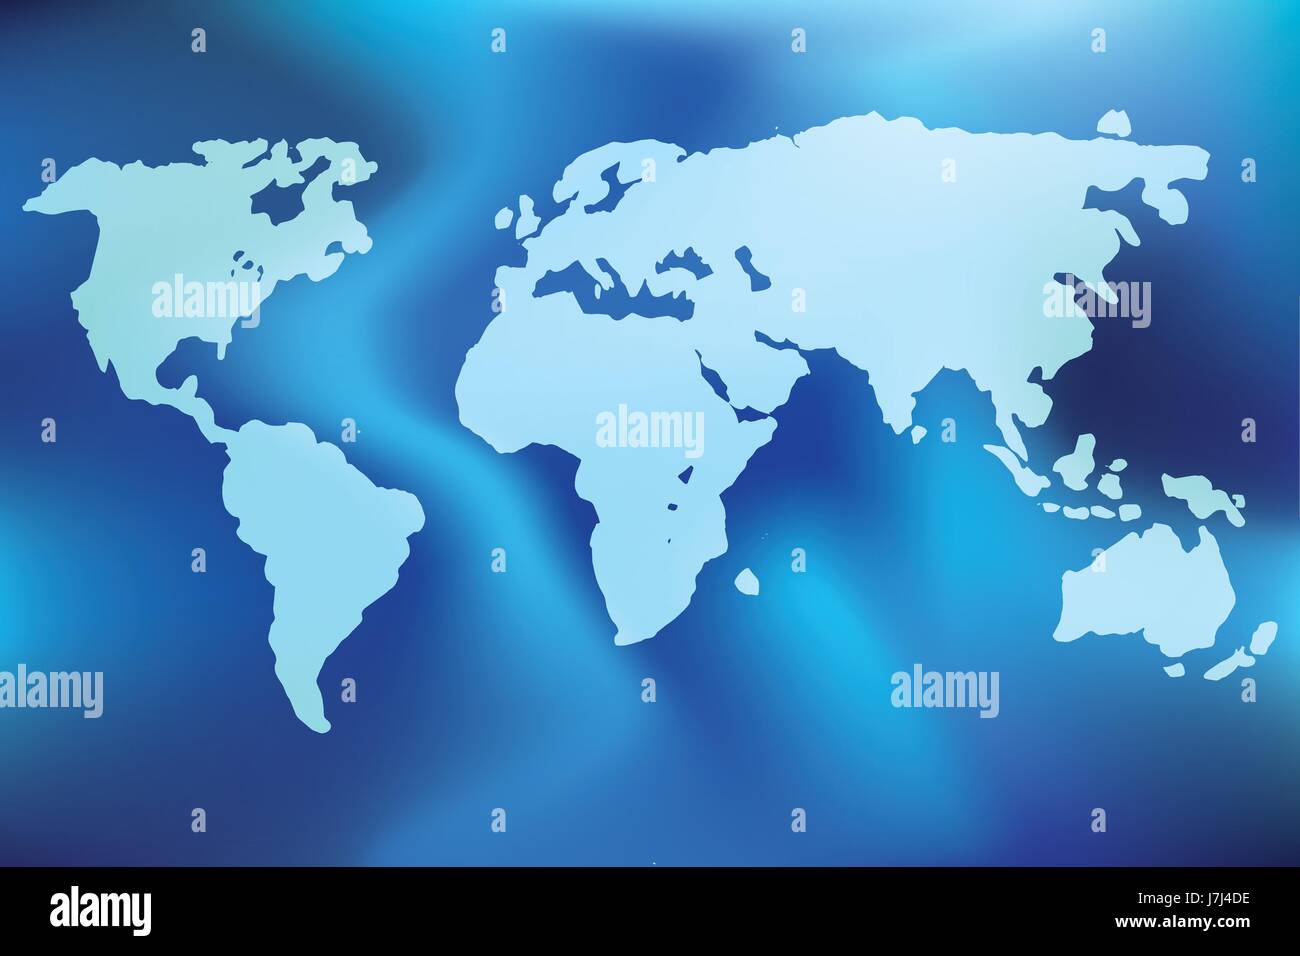 World map silhouette illustration, vector elements with icon. World map white silhouette with deep ocean background Stock Vector